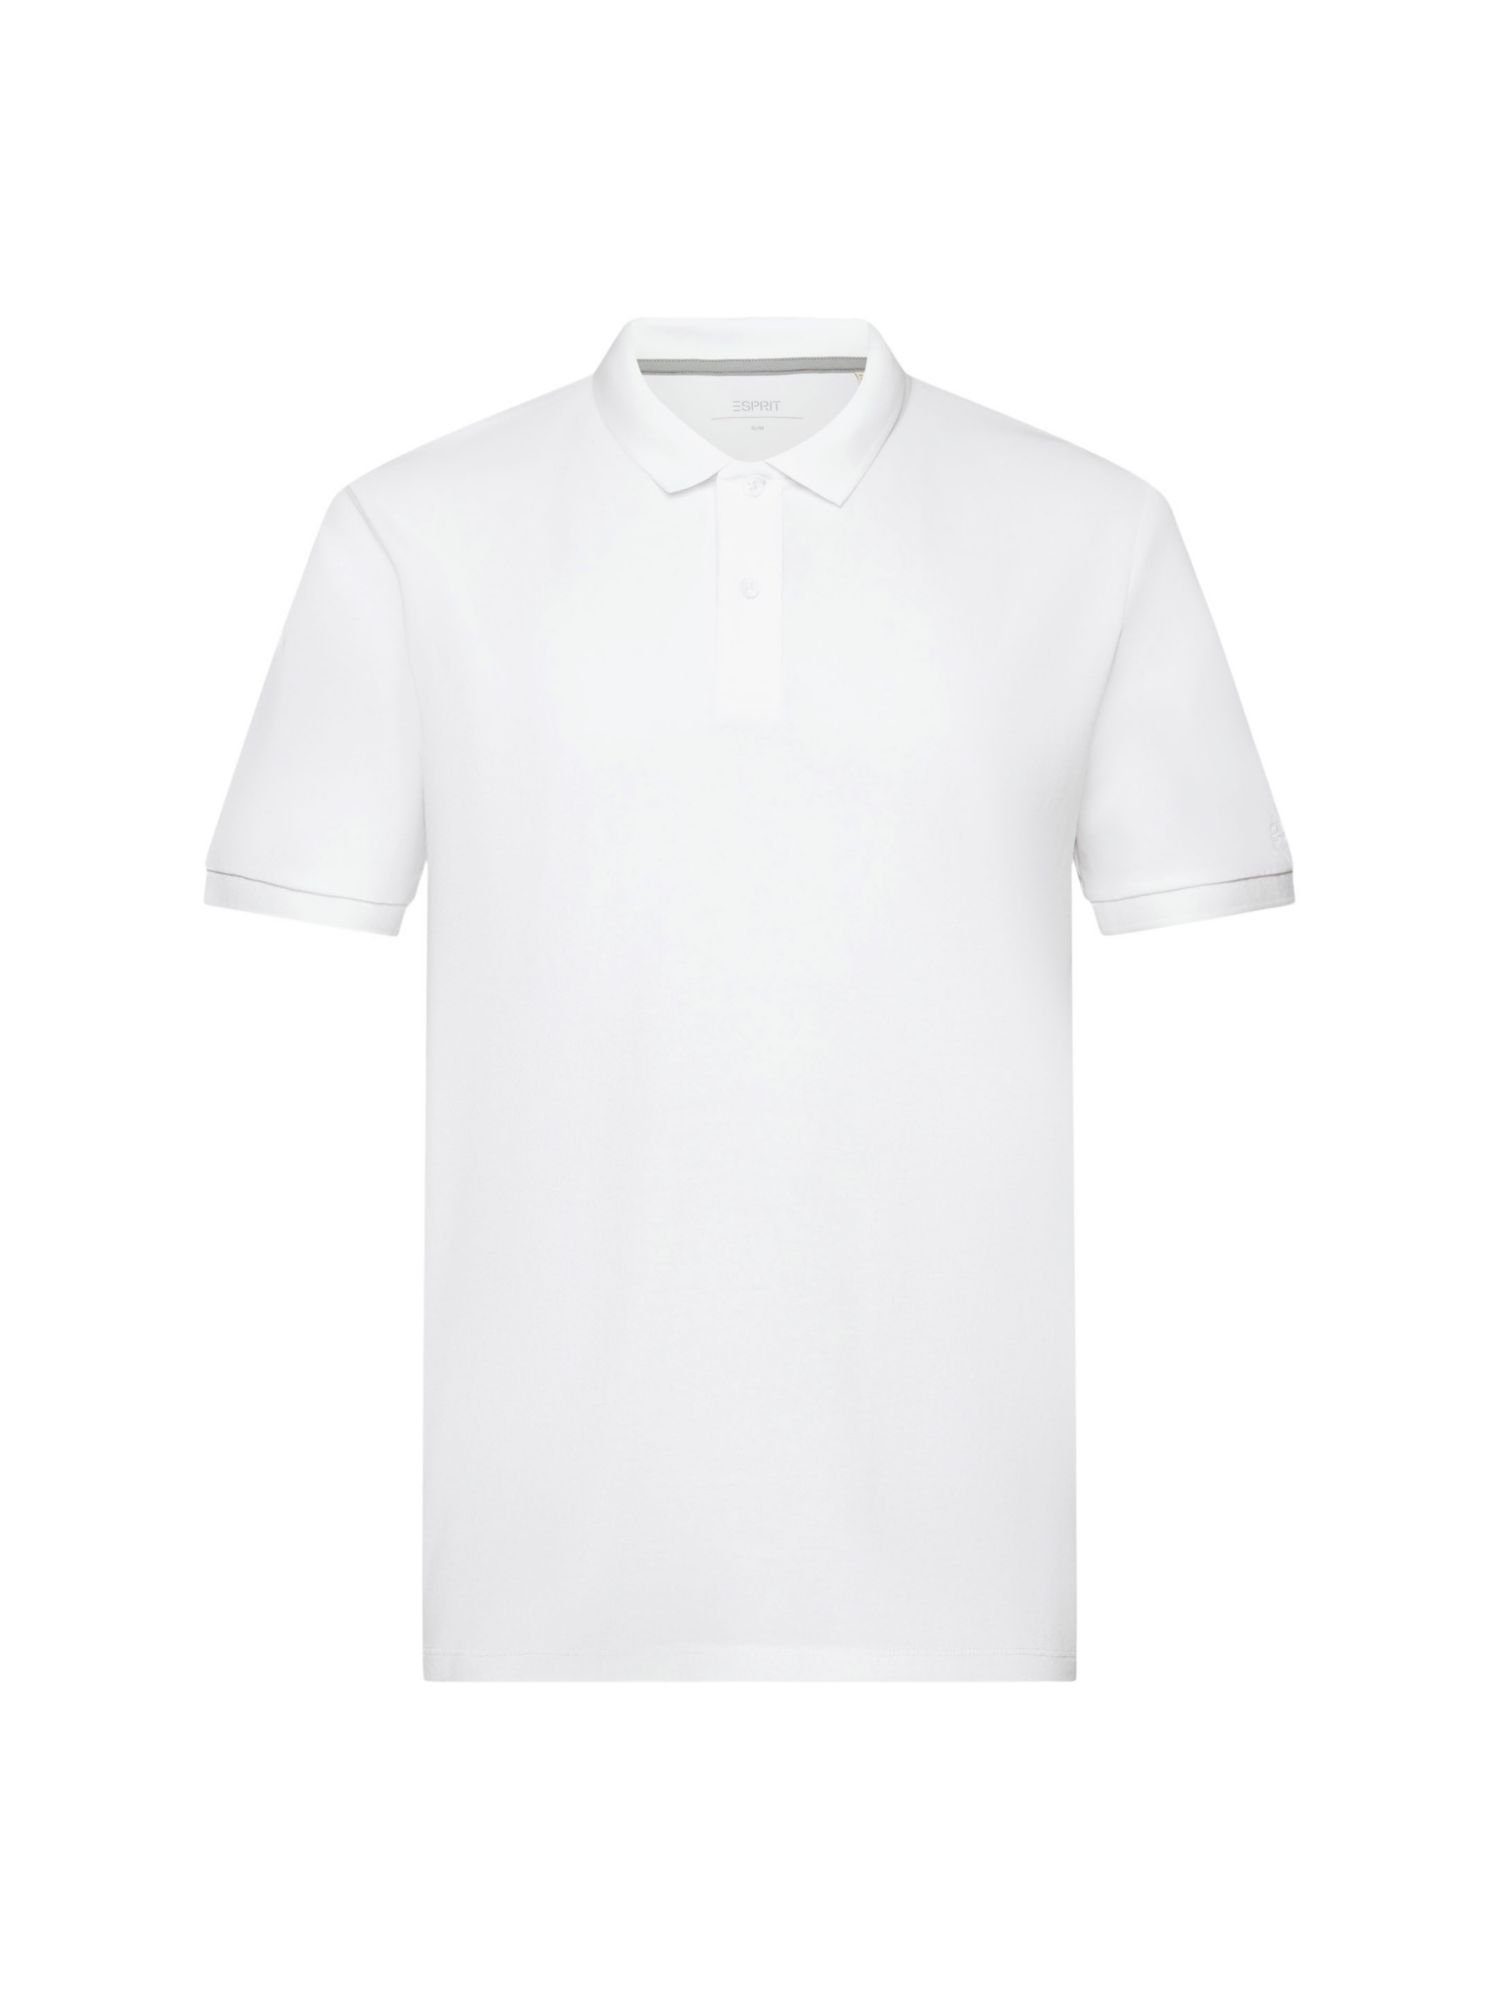 Esprit Poloshirt Slim-Fit-Poloshirt aus Baumwoll-Piqué WHITE | Poloshirts